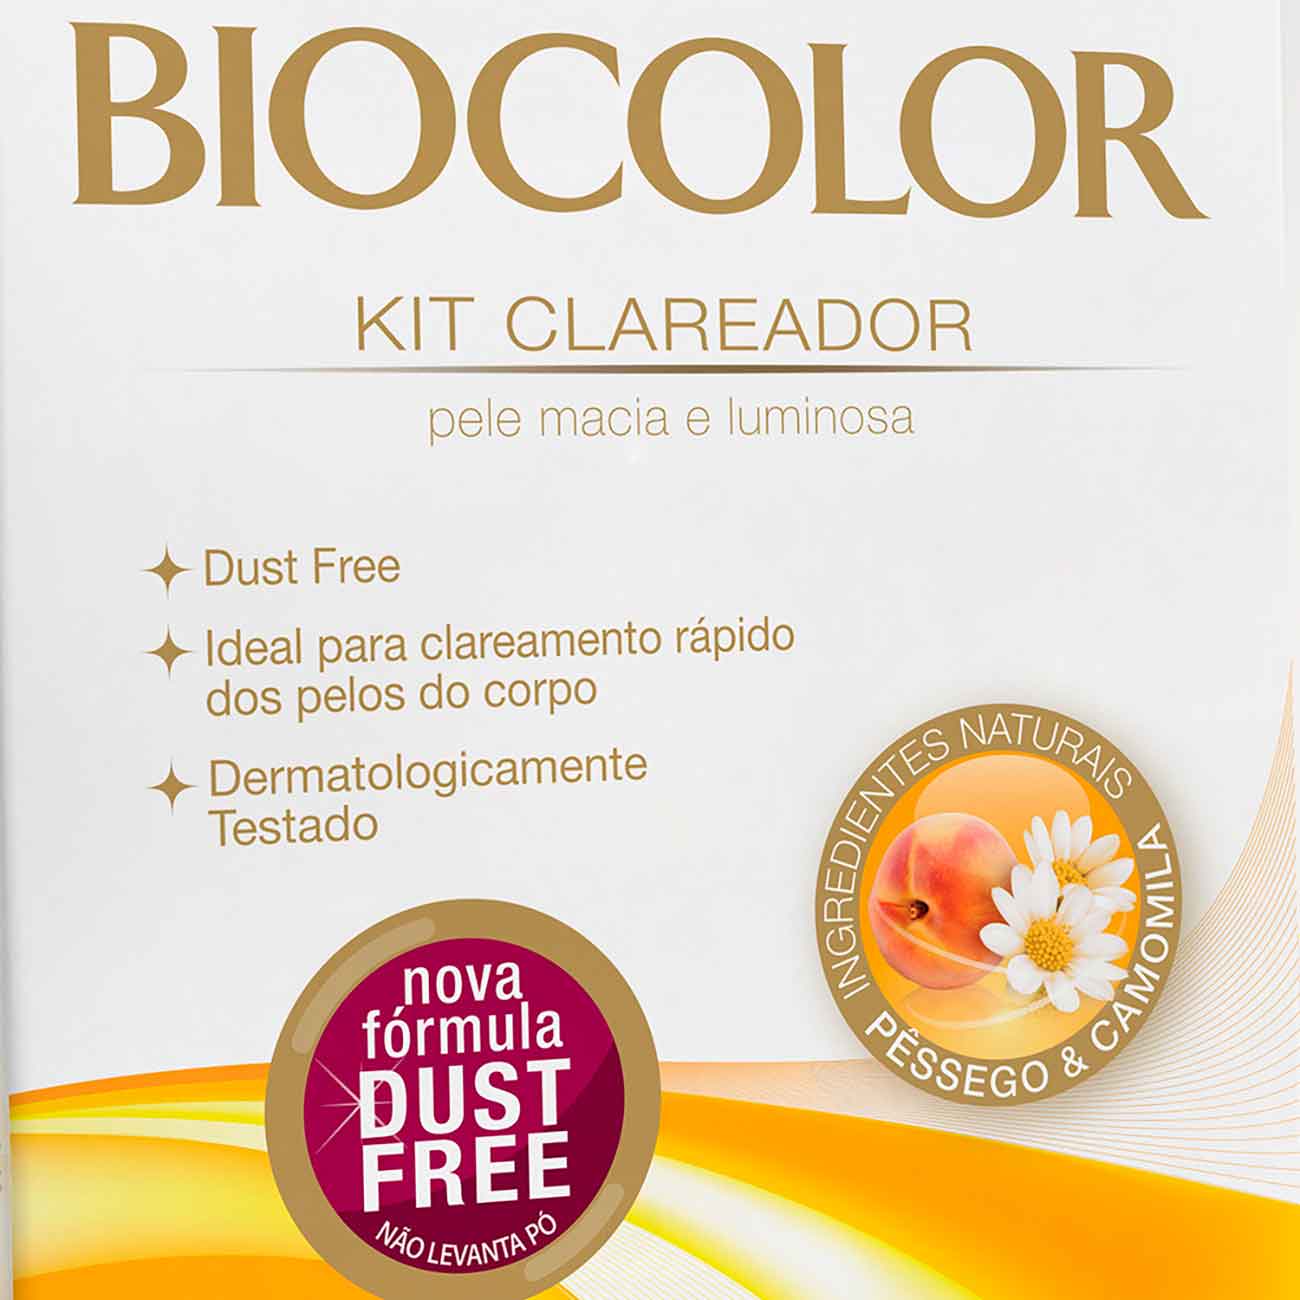 Kit Clareador Biocolor Pssego e Camomila